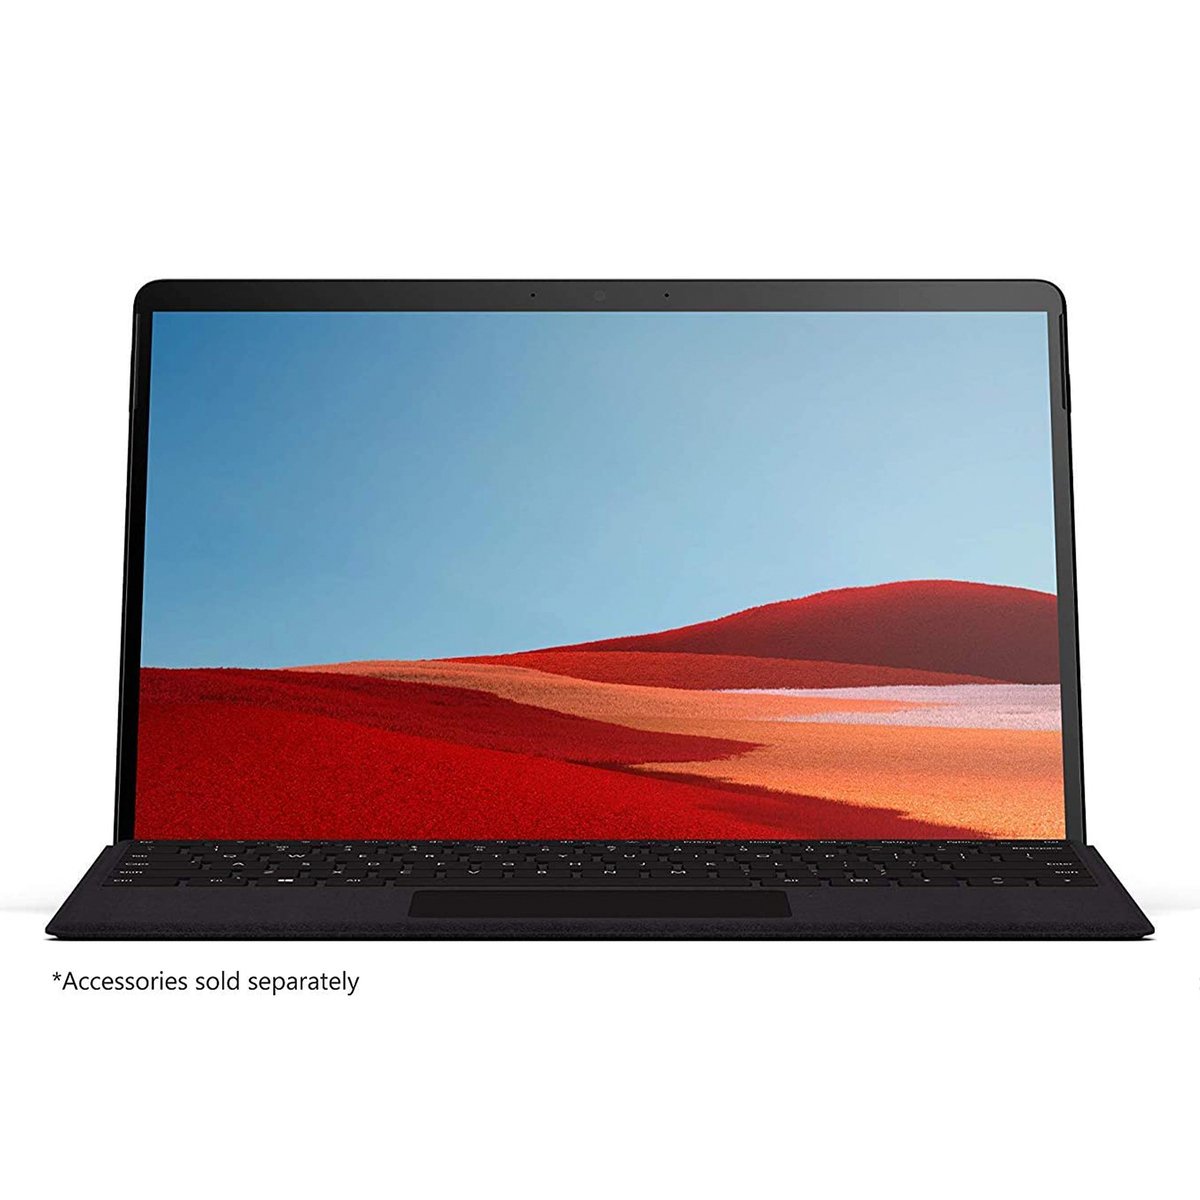 Microsoft Surface Pro X (MJX-00005) 2-in-1 Laptop, Microsoft-SQ1-3GHz Processor, 13 Inch, 128GB SSD, 8GB RAM, Microsoft SQ1 Adreno 685 GPU, WiFi+4G LTE, Windows10, No Keyboard,Black